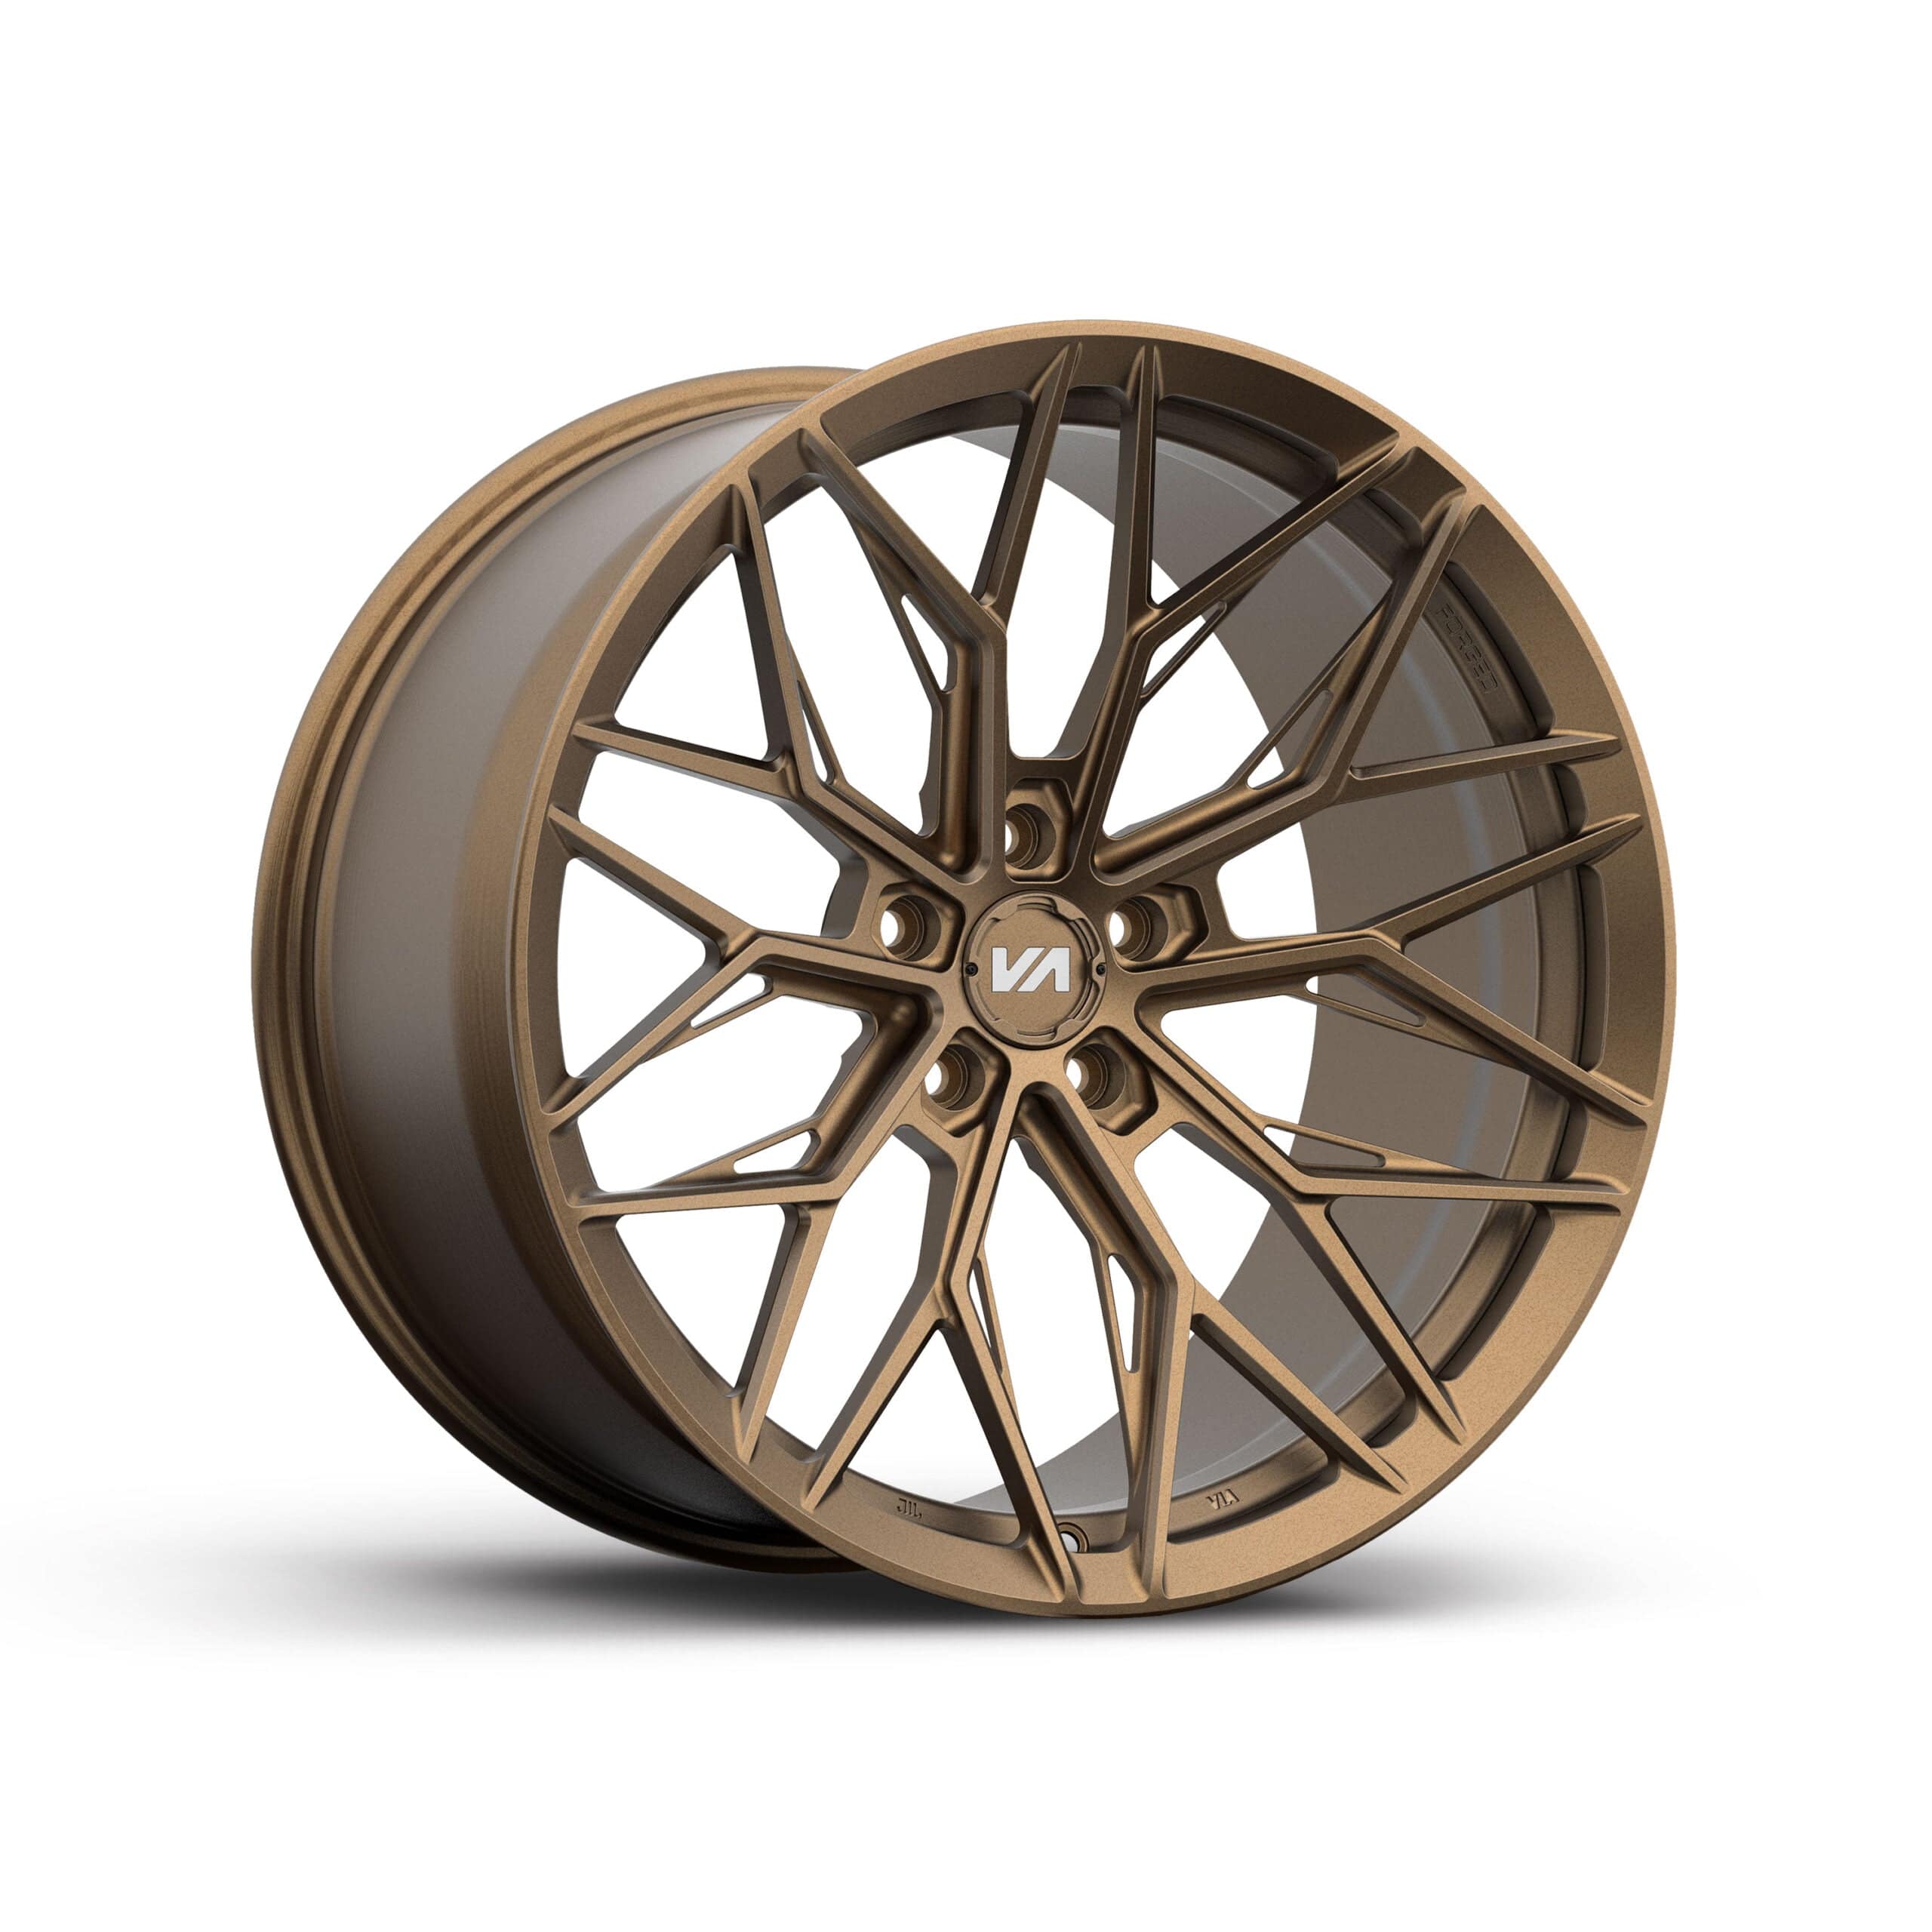 Kies-Motorsports Variant Variant™ Maxim Collection Alloy Wheels 19x8.5